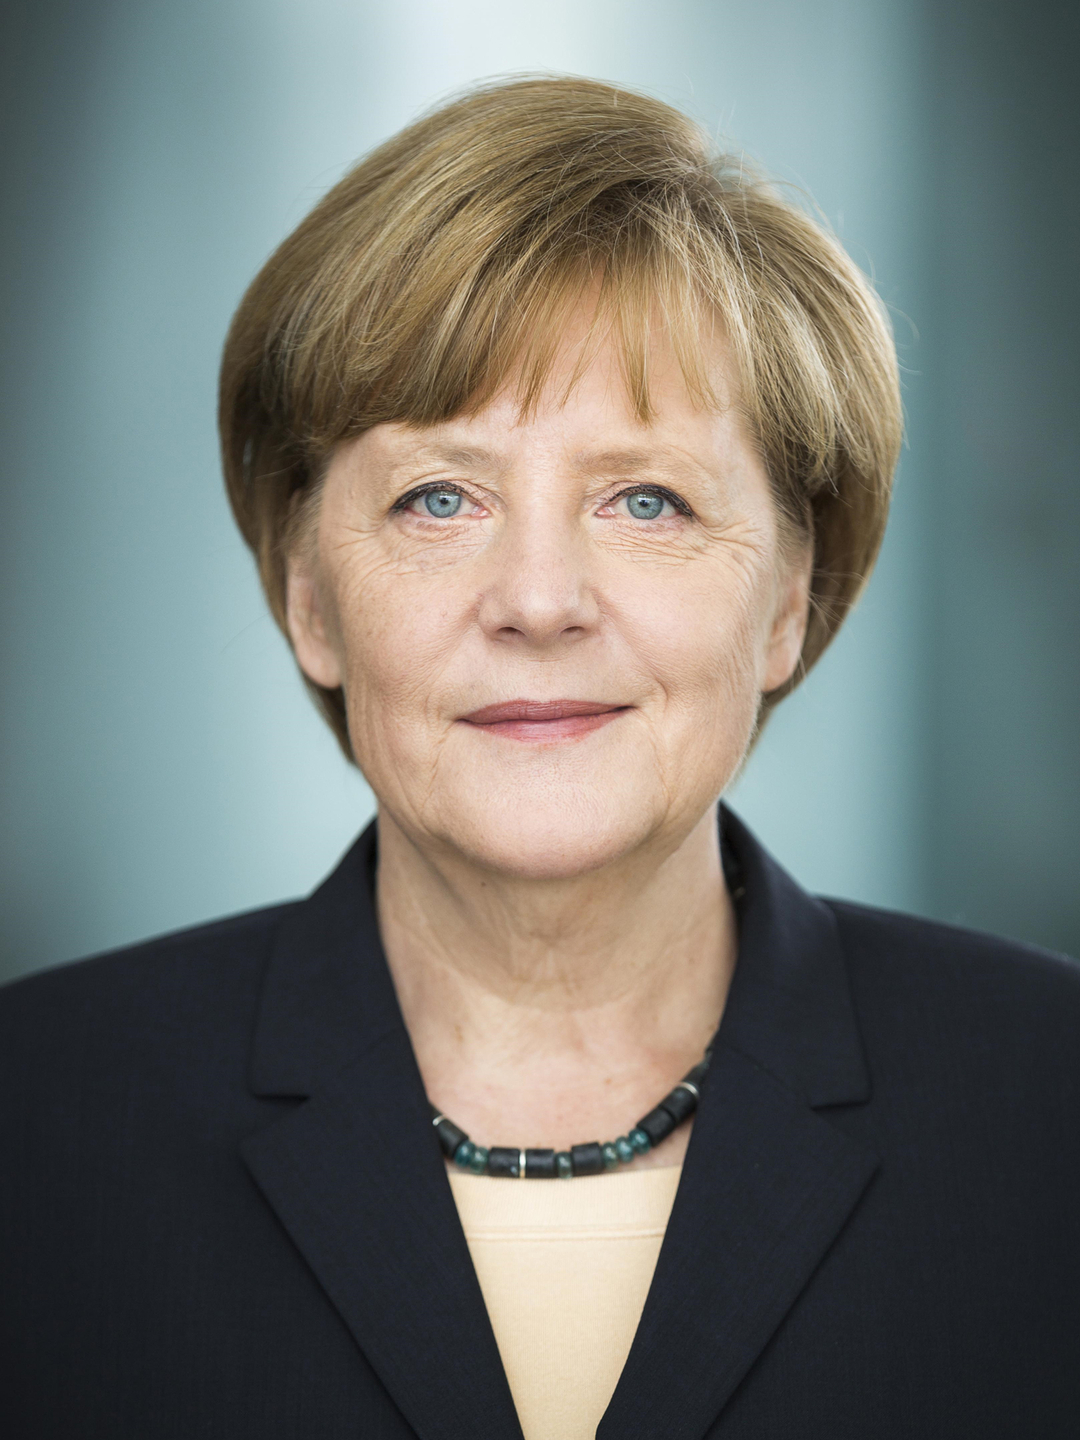 Angela Merkel life path